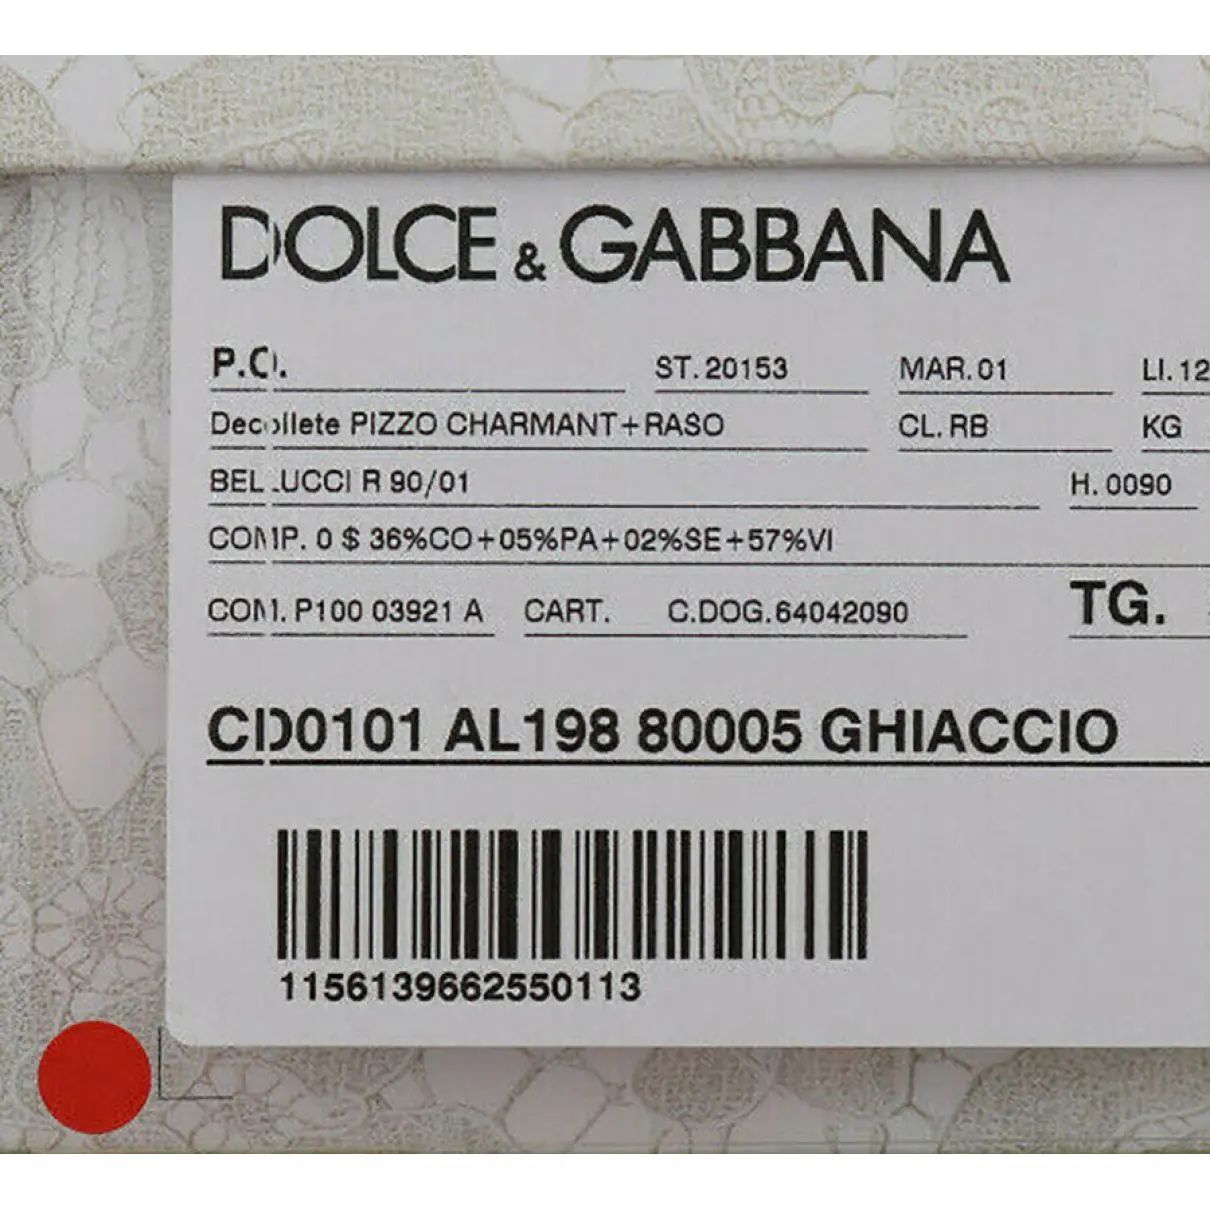 Buy Dolce & Gabbana Cloth heels online